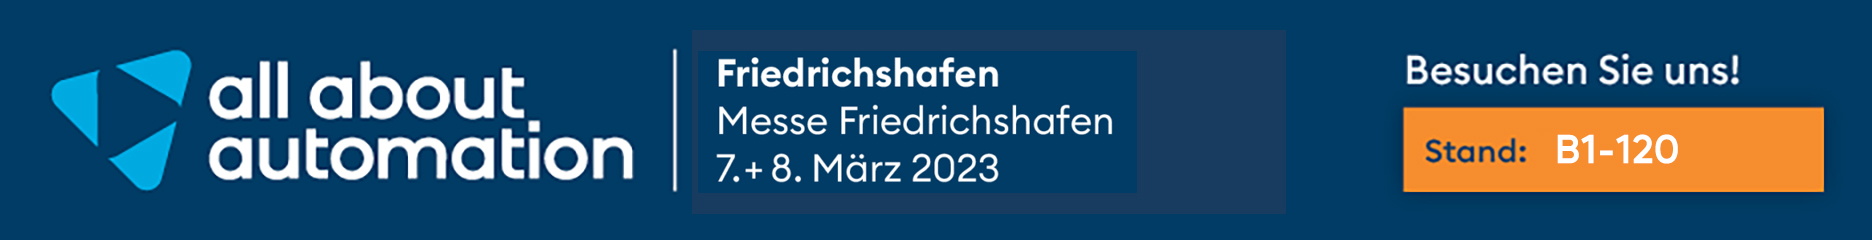 Bannière All About Automation Friedrichshafen